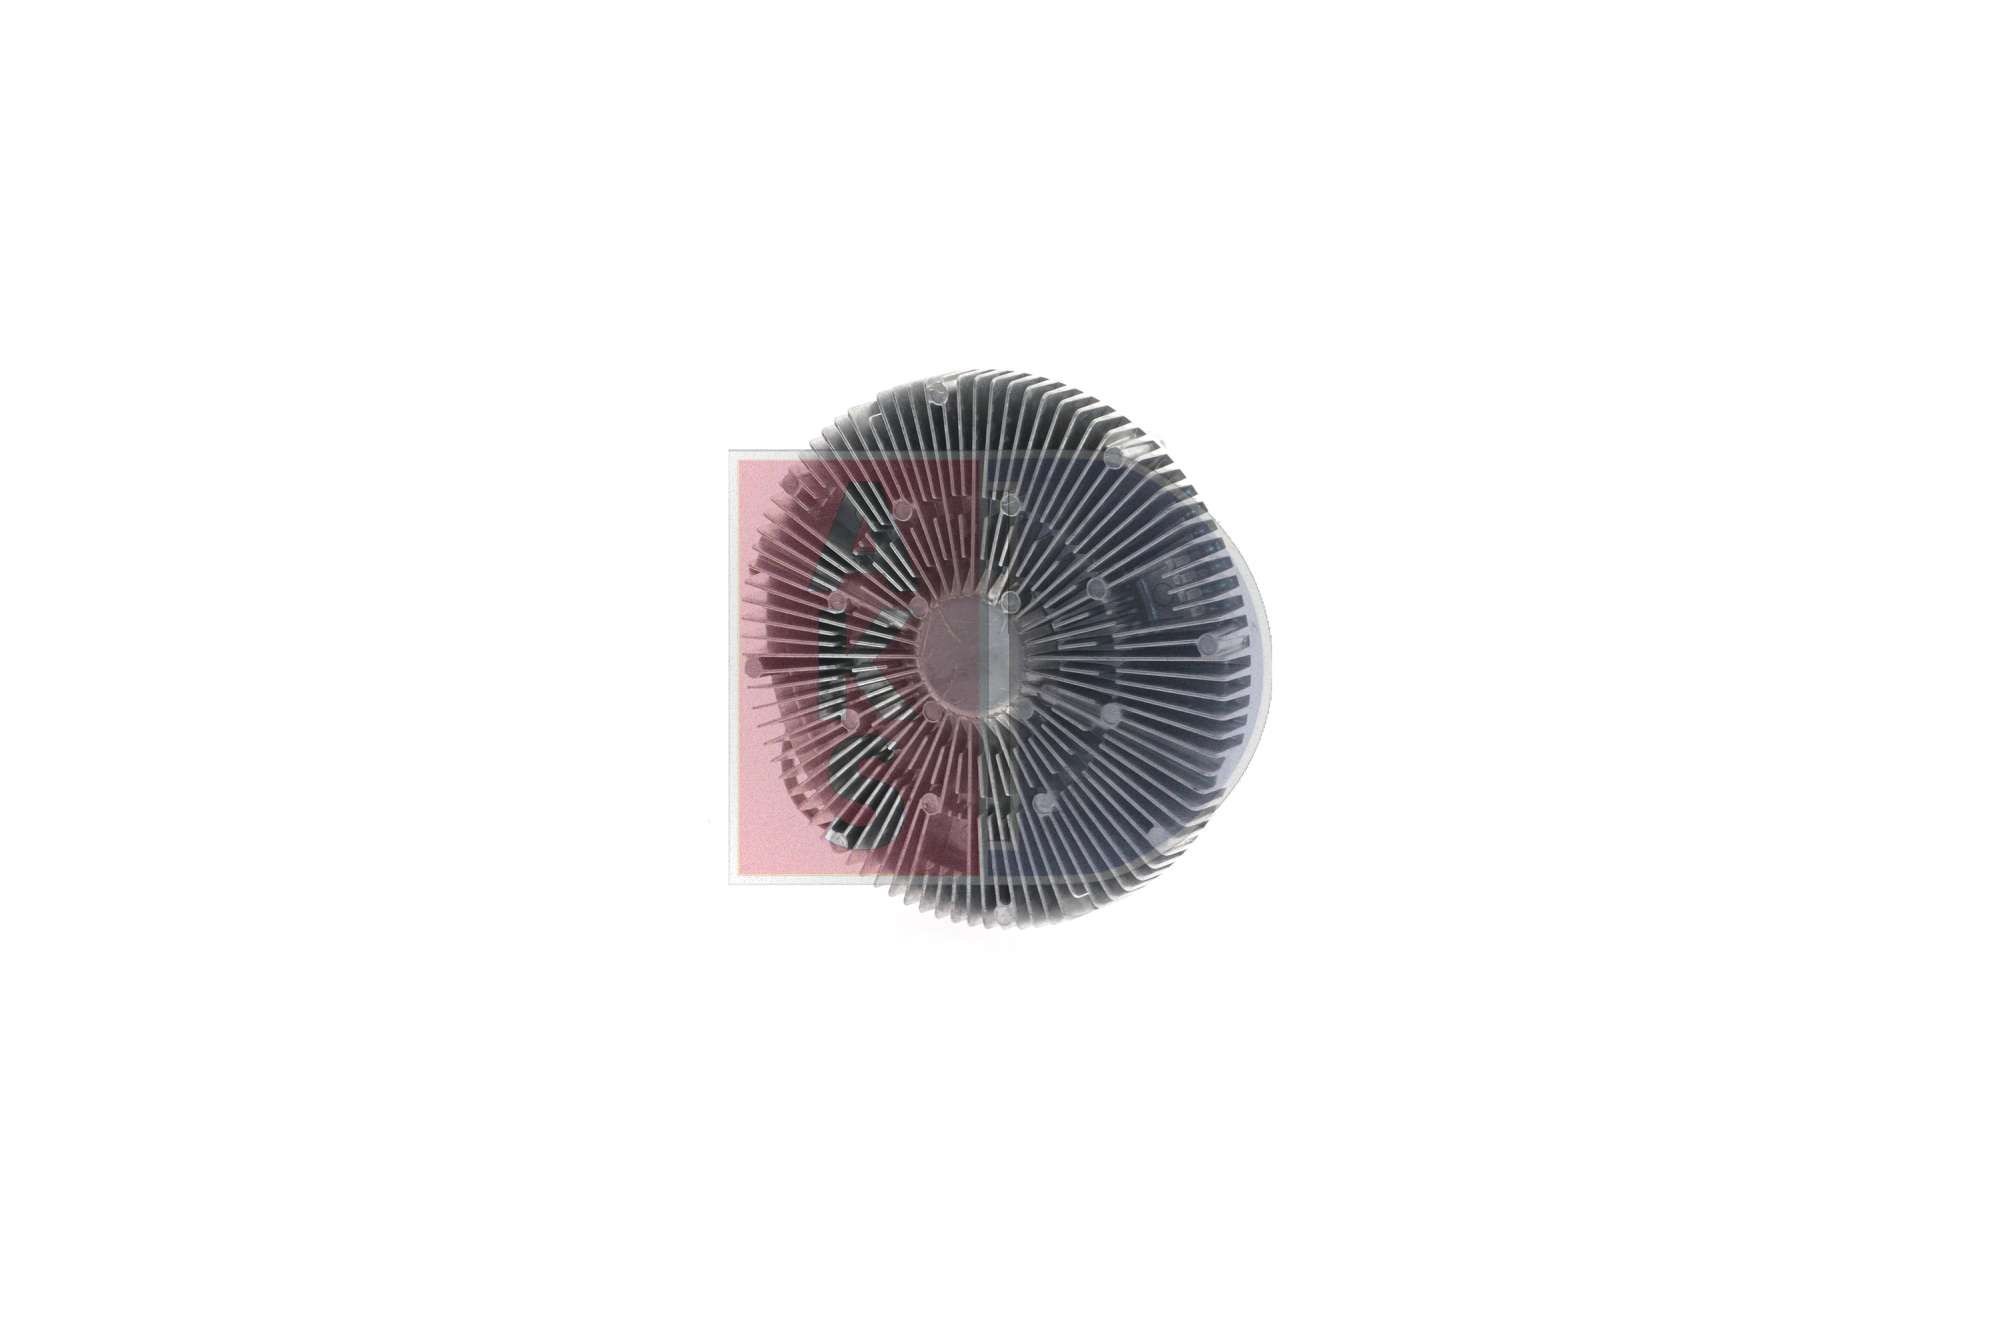 268033N Thermal fan clutch AKS DASIS 268033N review and test